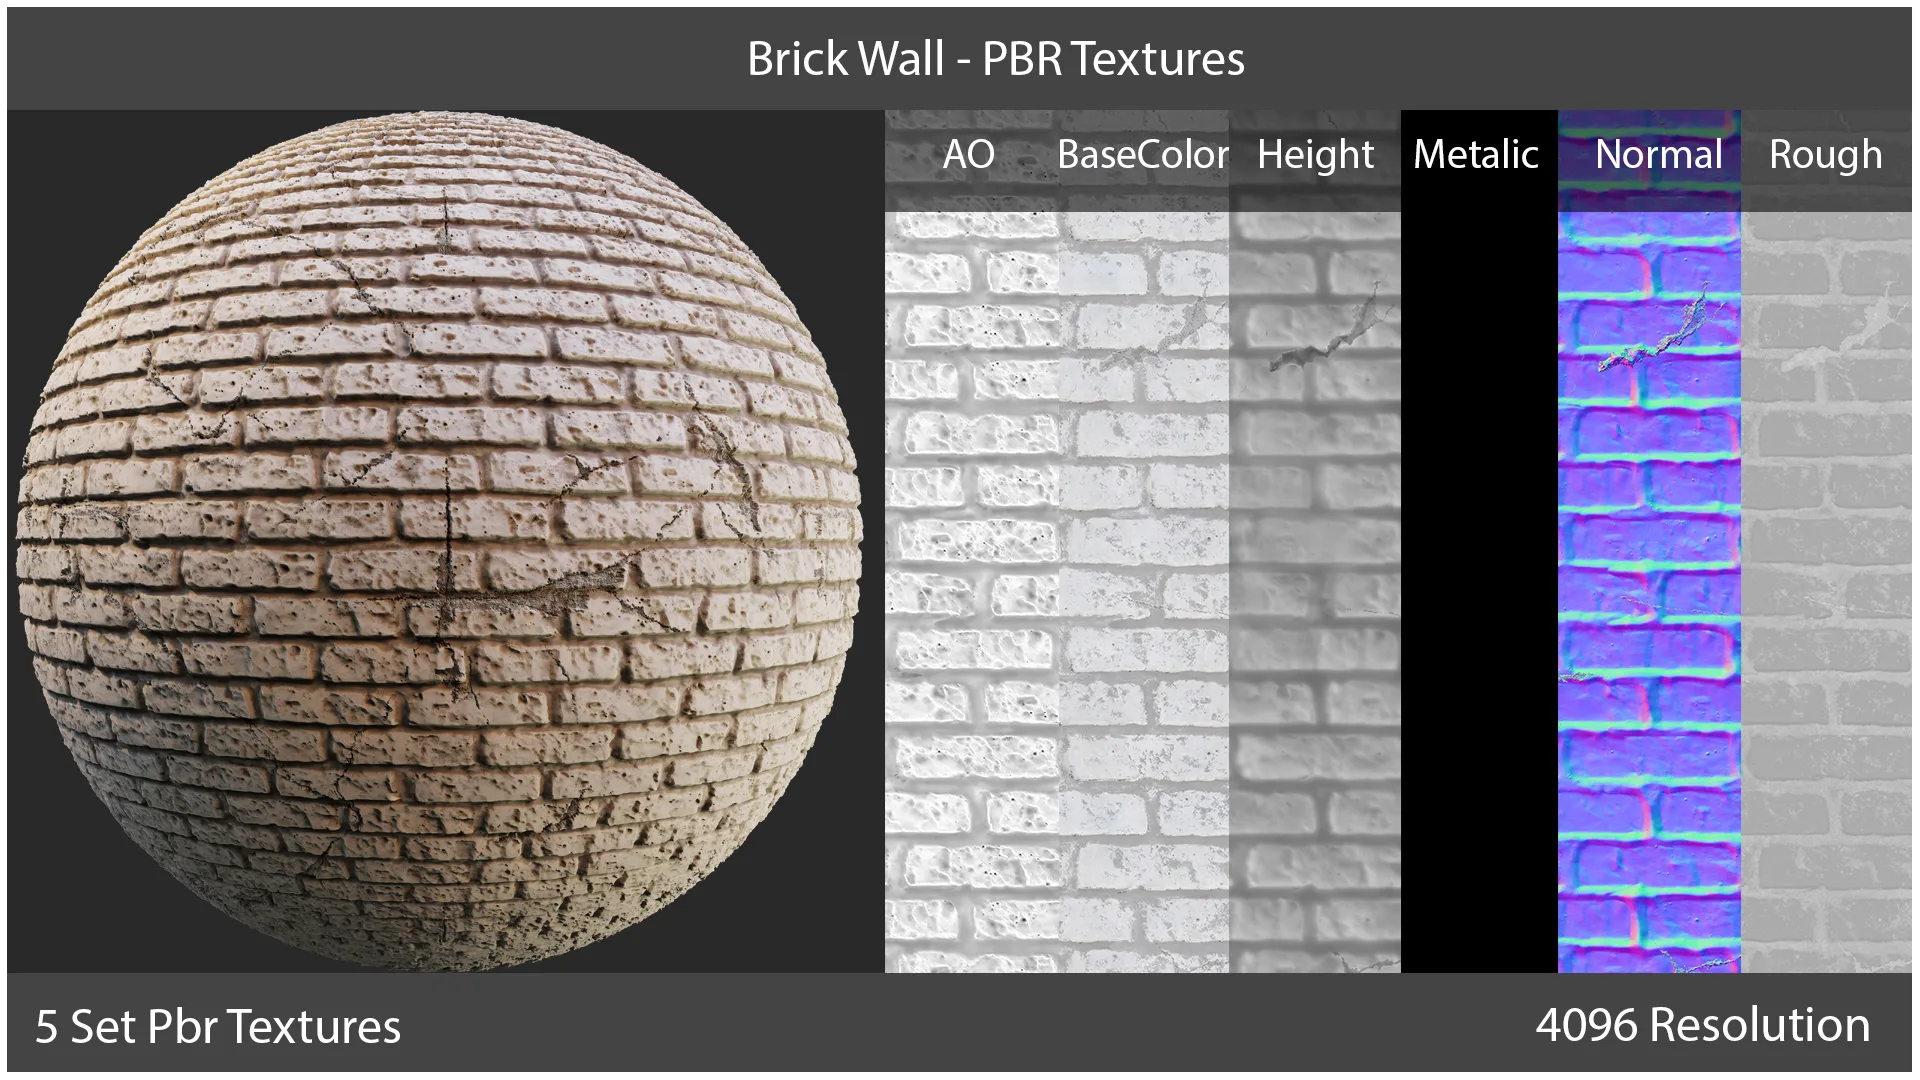 Brick Wall - PBR Textures